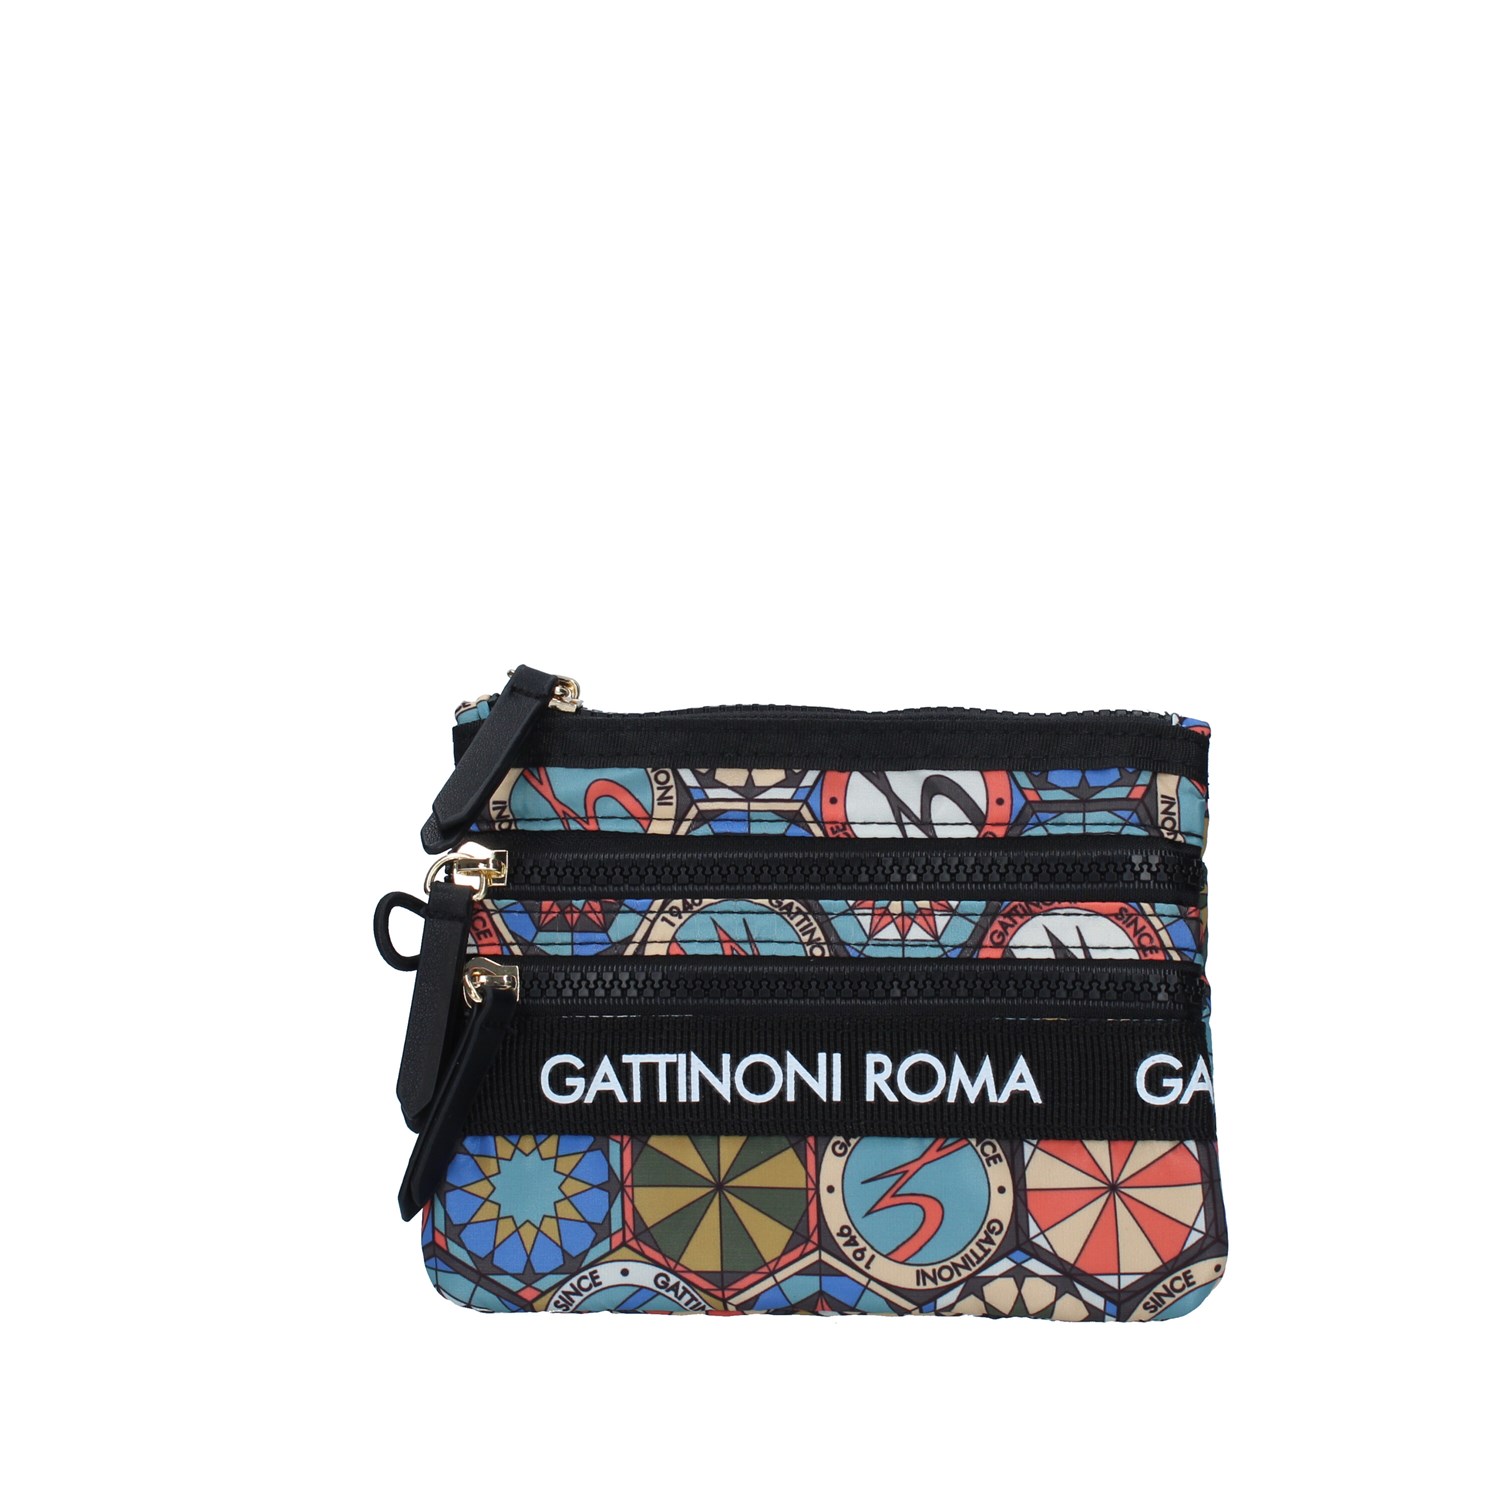 Gattinoni Roma Bags Accessories Clutch BLACK BENTF7688WI